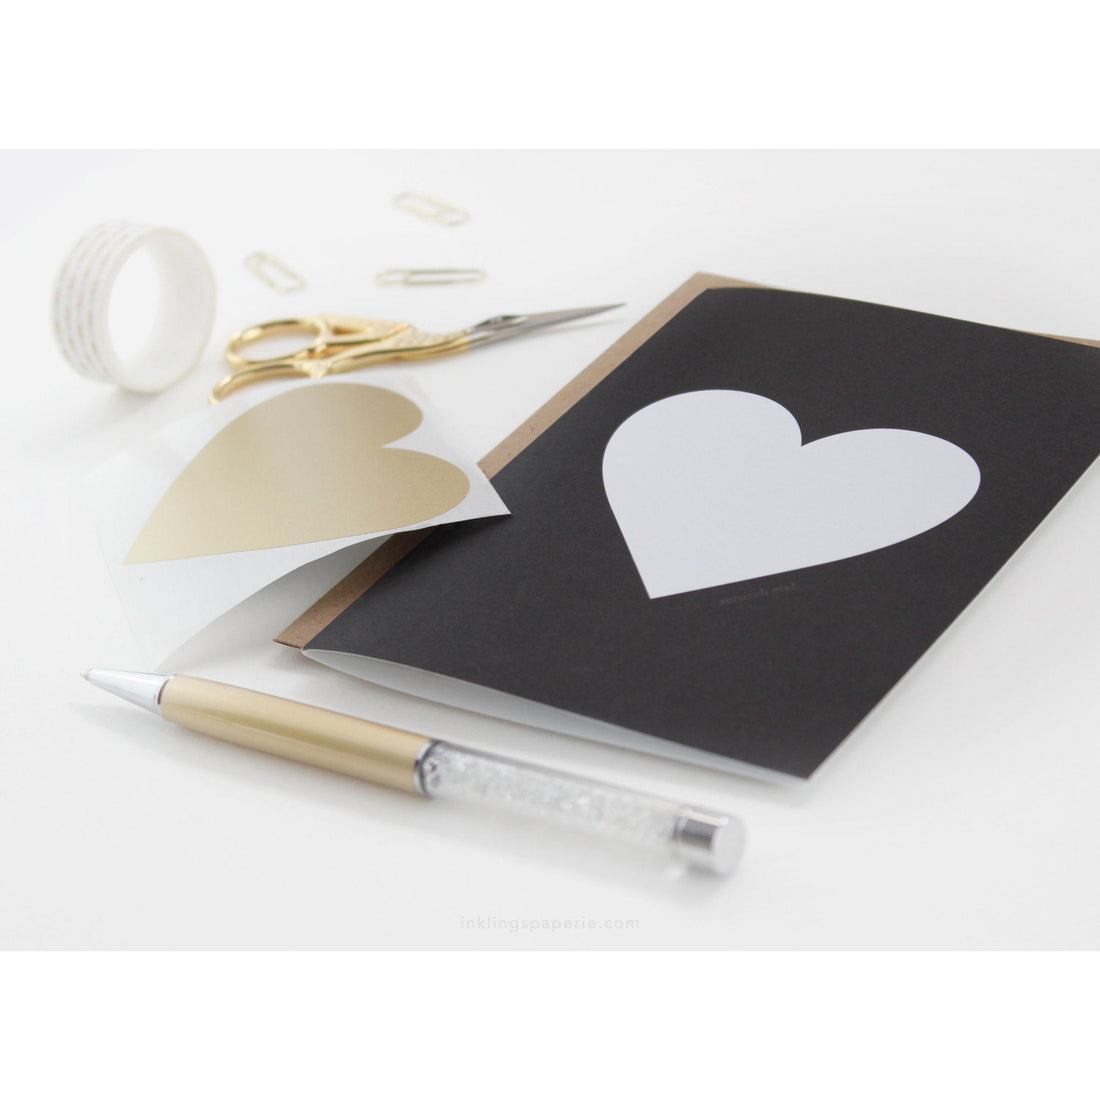 inklings-paperie-black-&-gold-heart-scratch-off-card-single-card-inkl-gce010